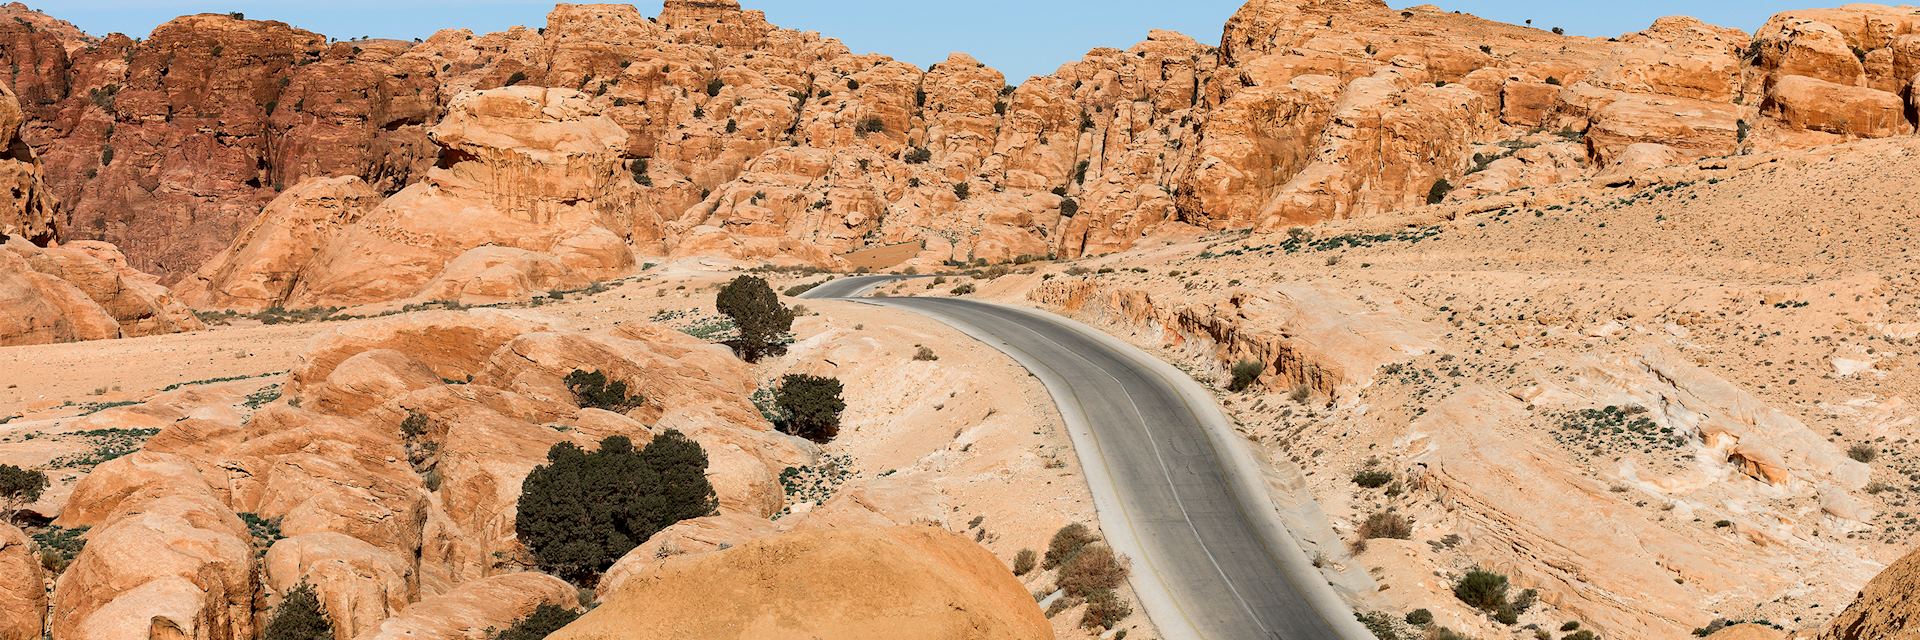 The King's Highway, Wadi Rum